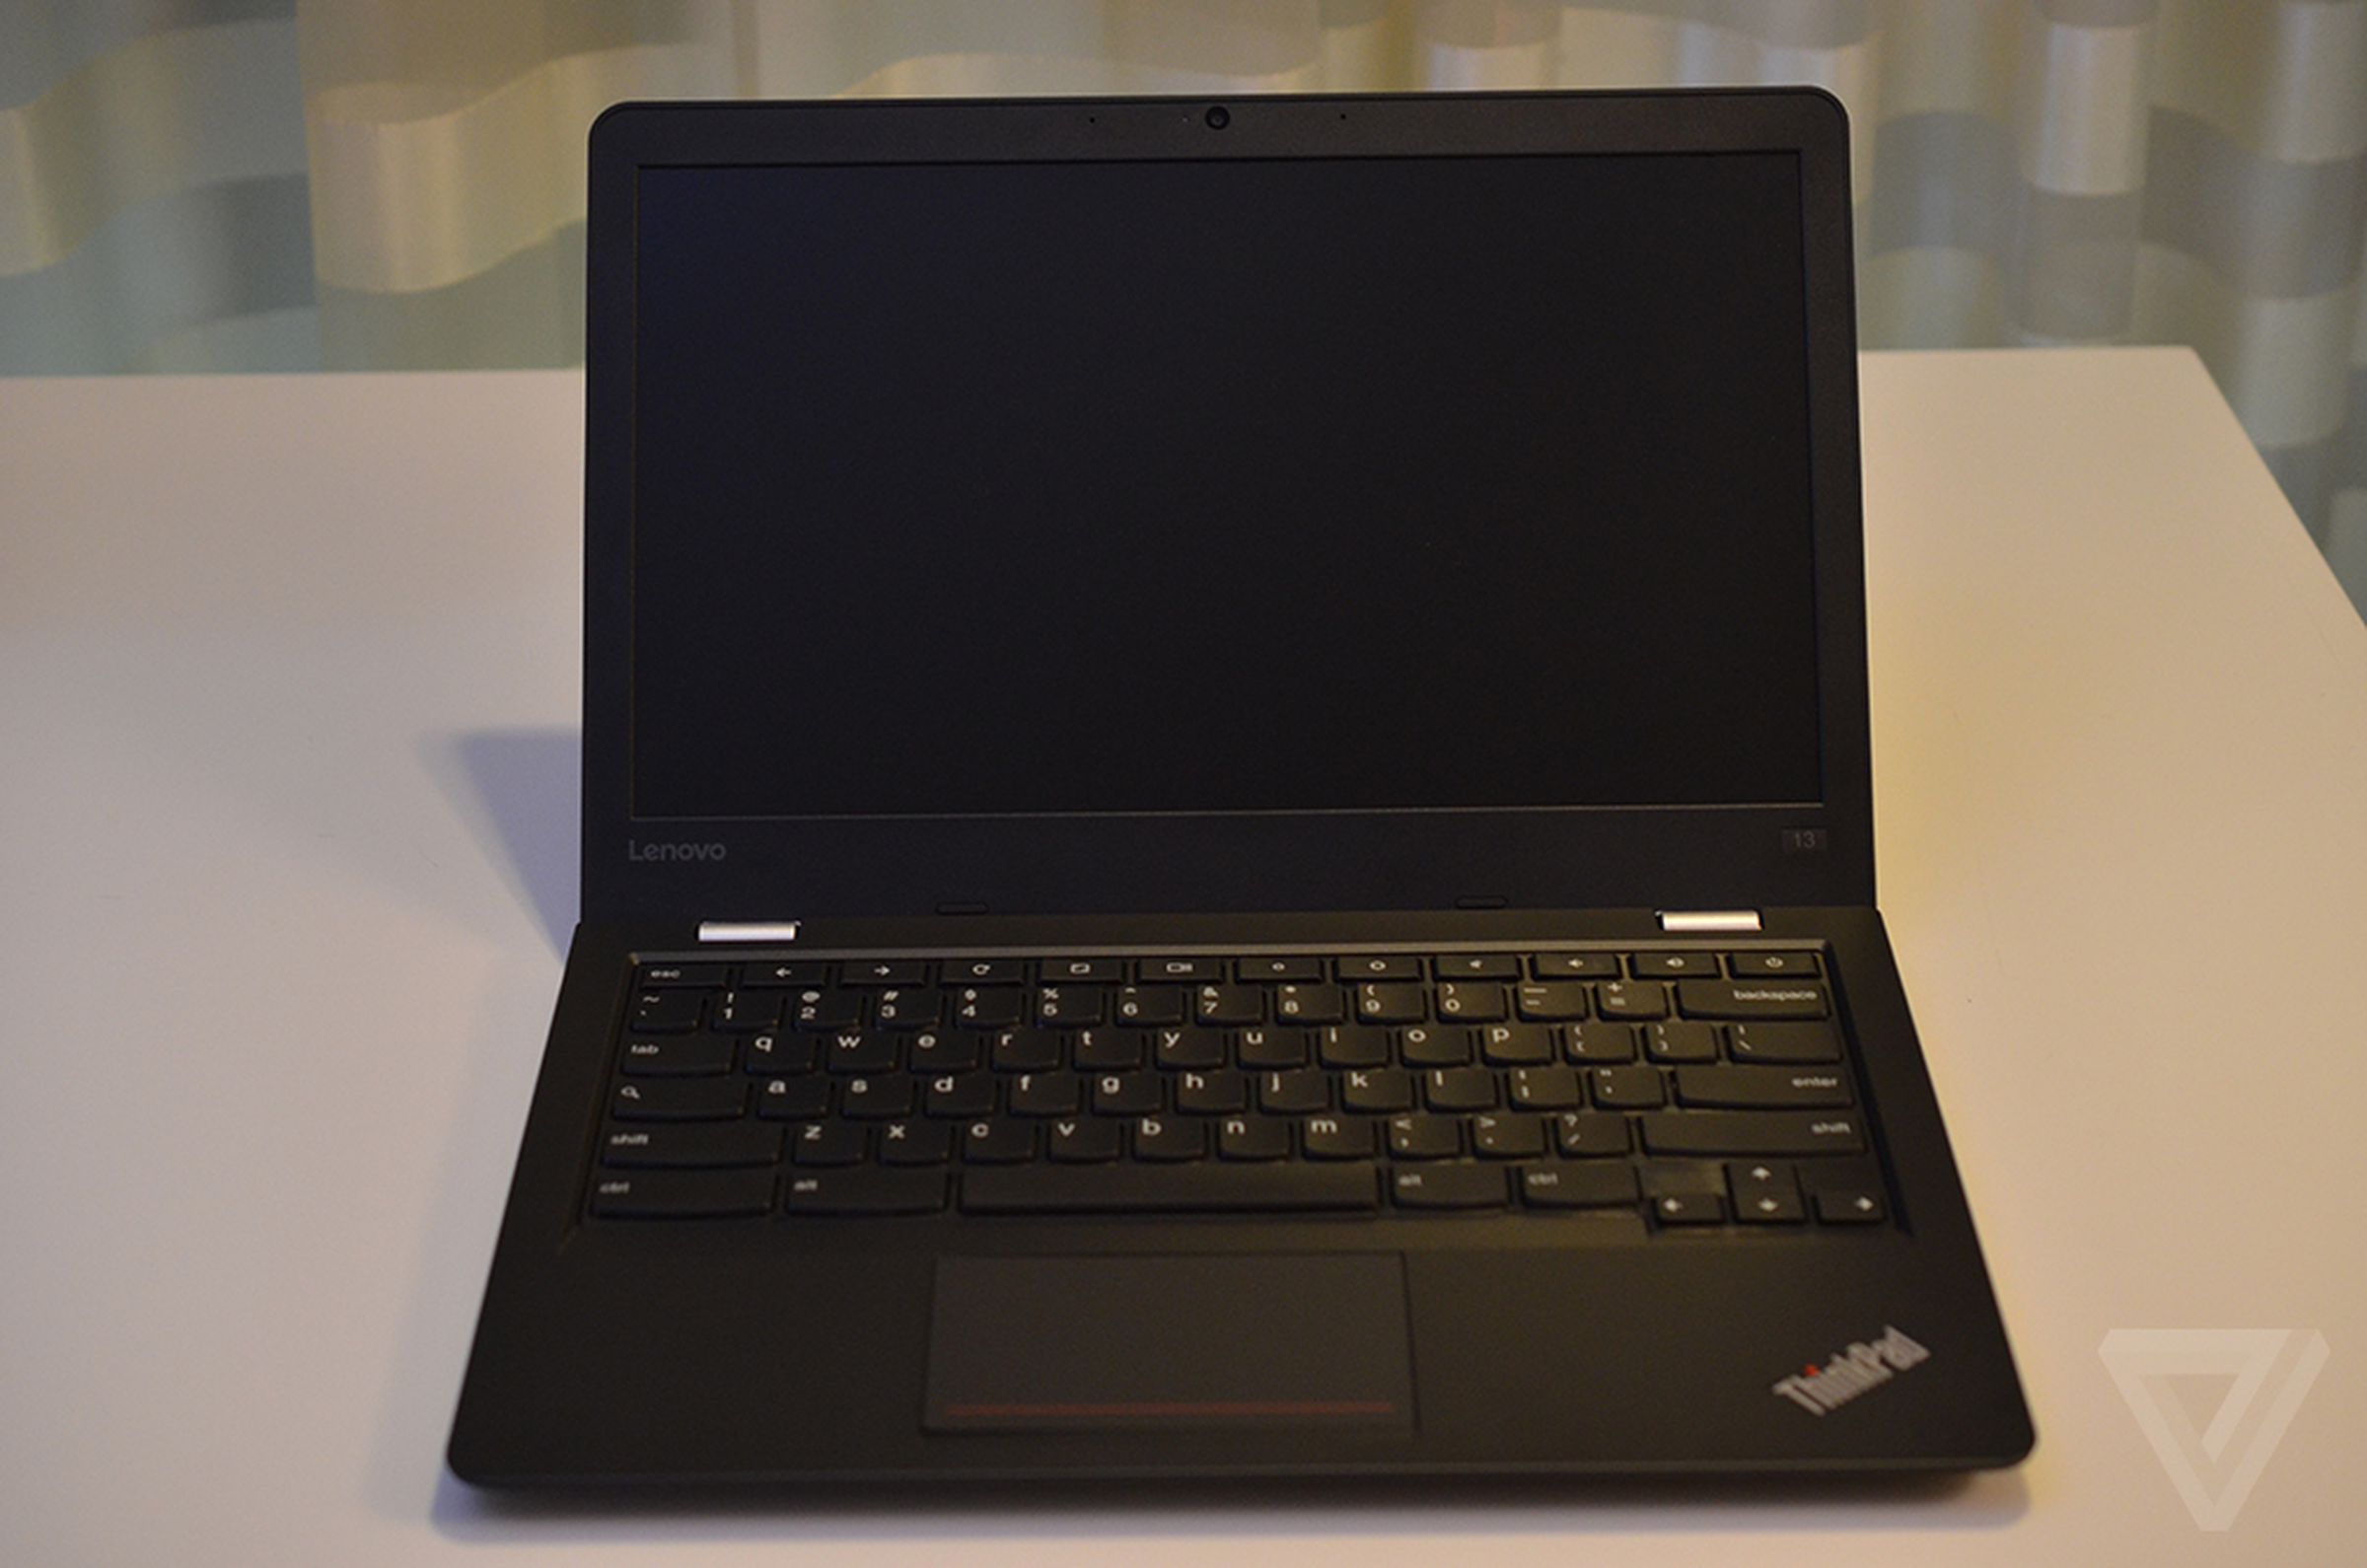 Lenovo ThinkPad 13 hands-on photos